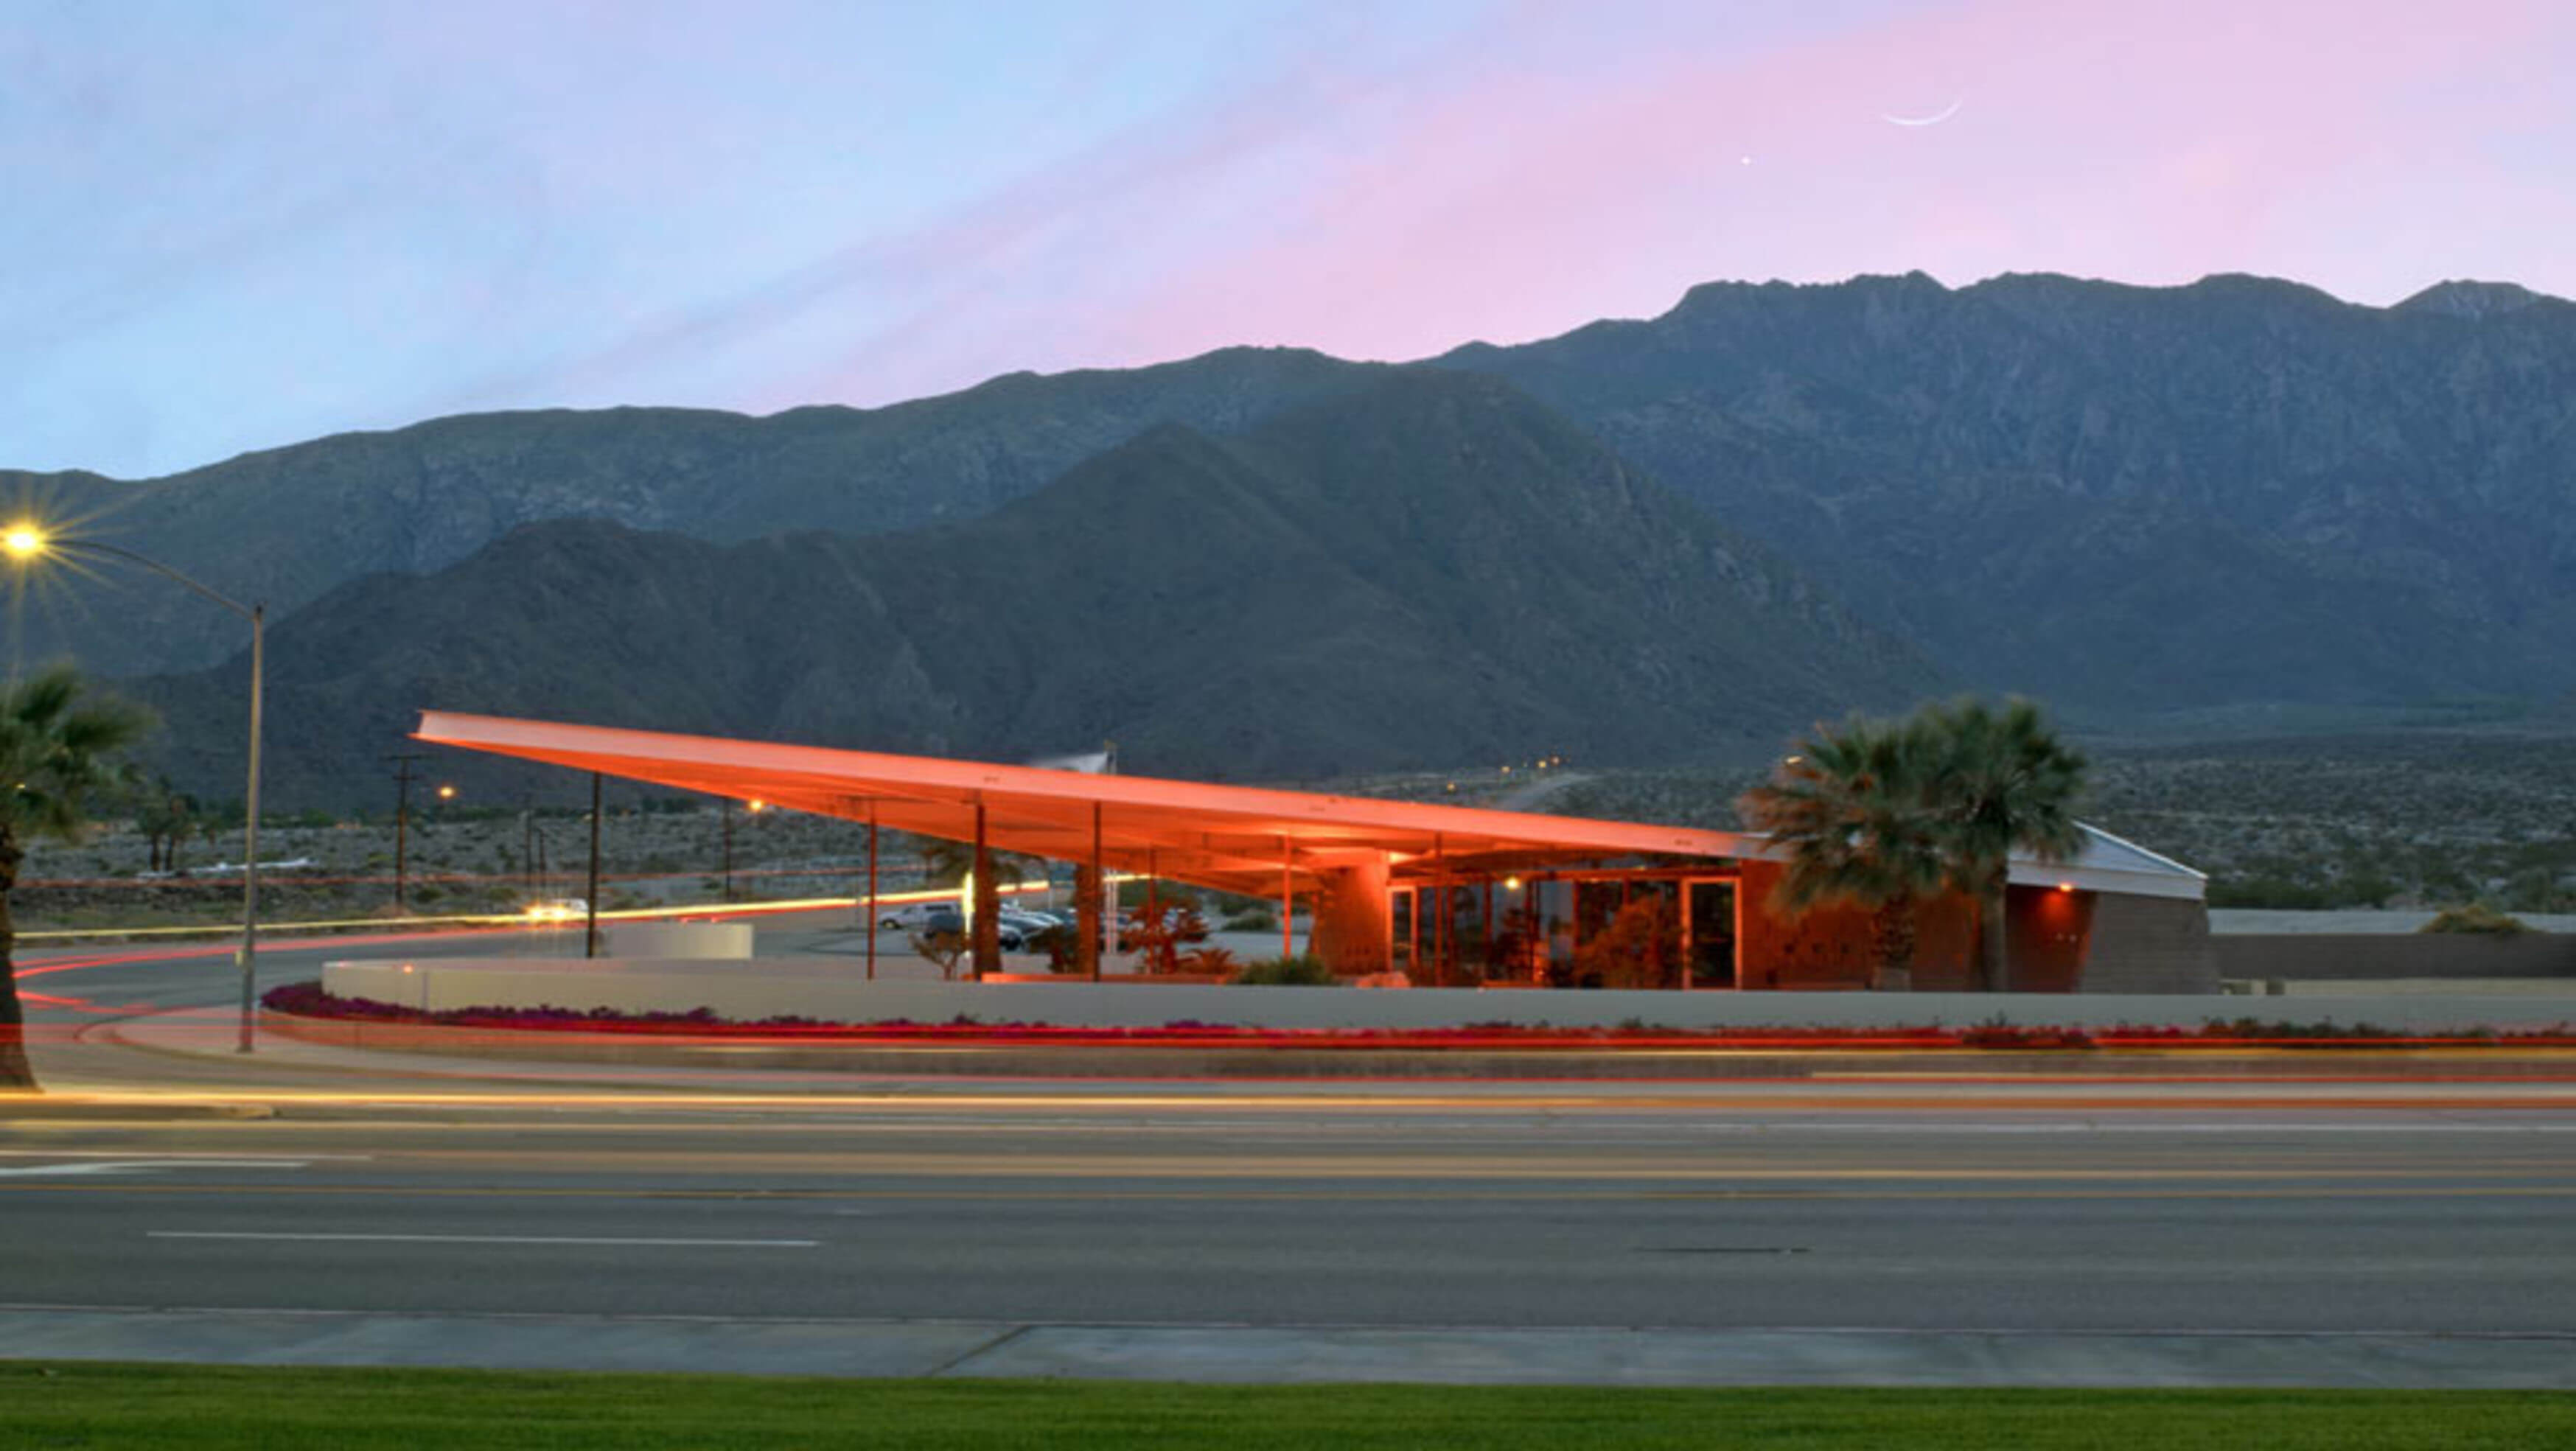 Palm Springs Visitor Center